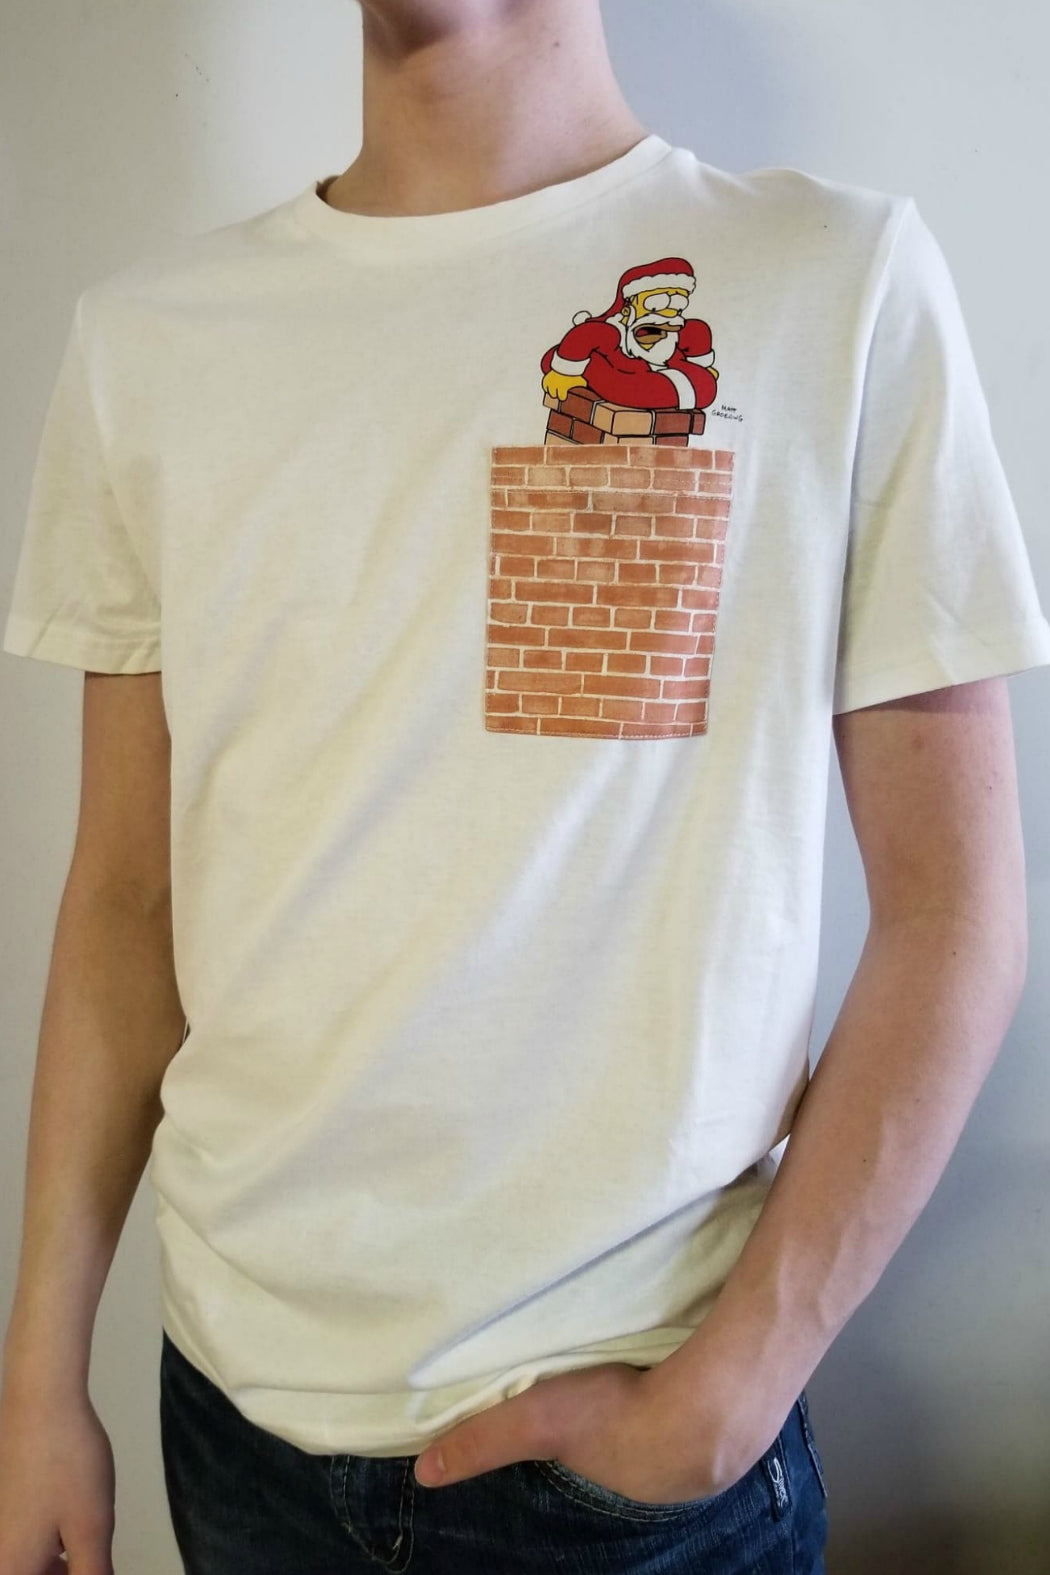 The Simpsons Original Christmas T-Shirt